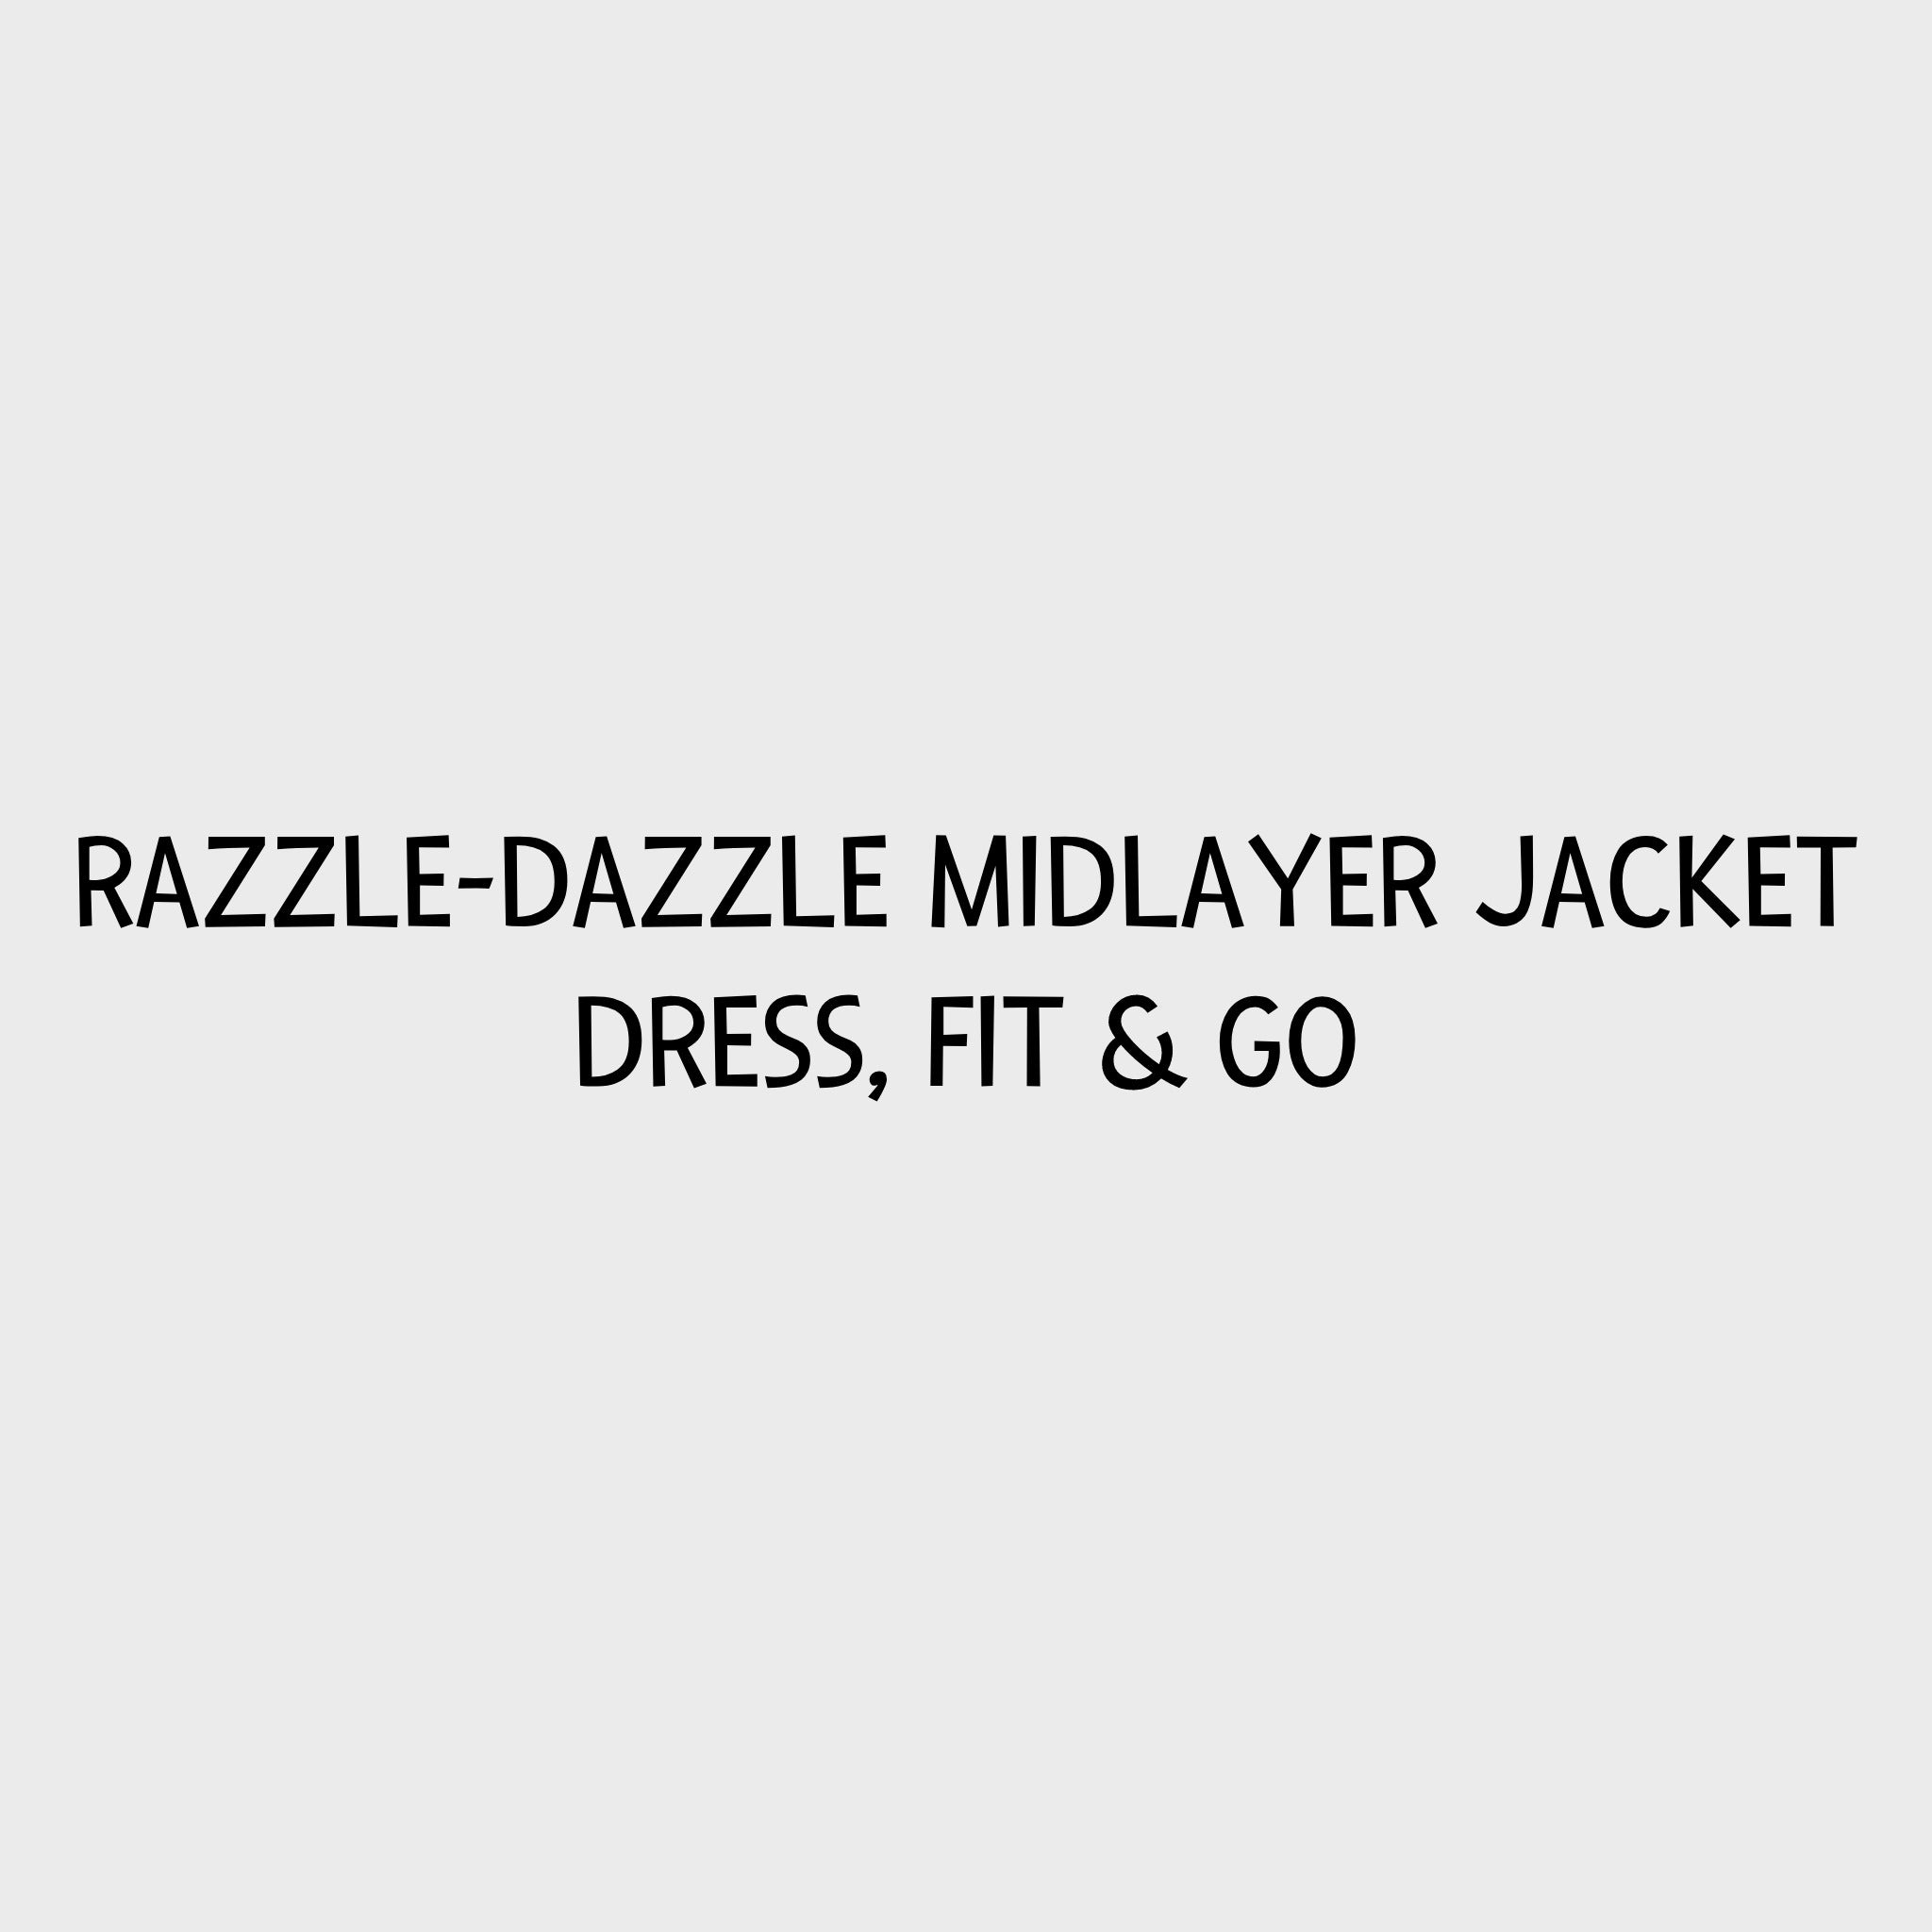 Video - Hurtta Razzle-Dazzle Midlayer Jacket - Dress, Fit & Go